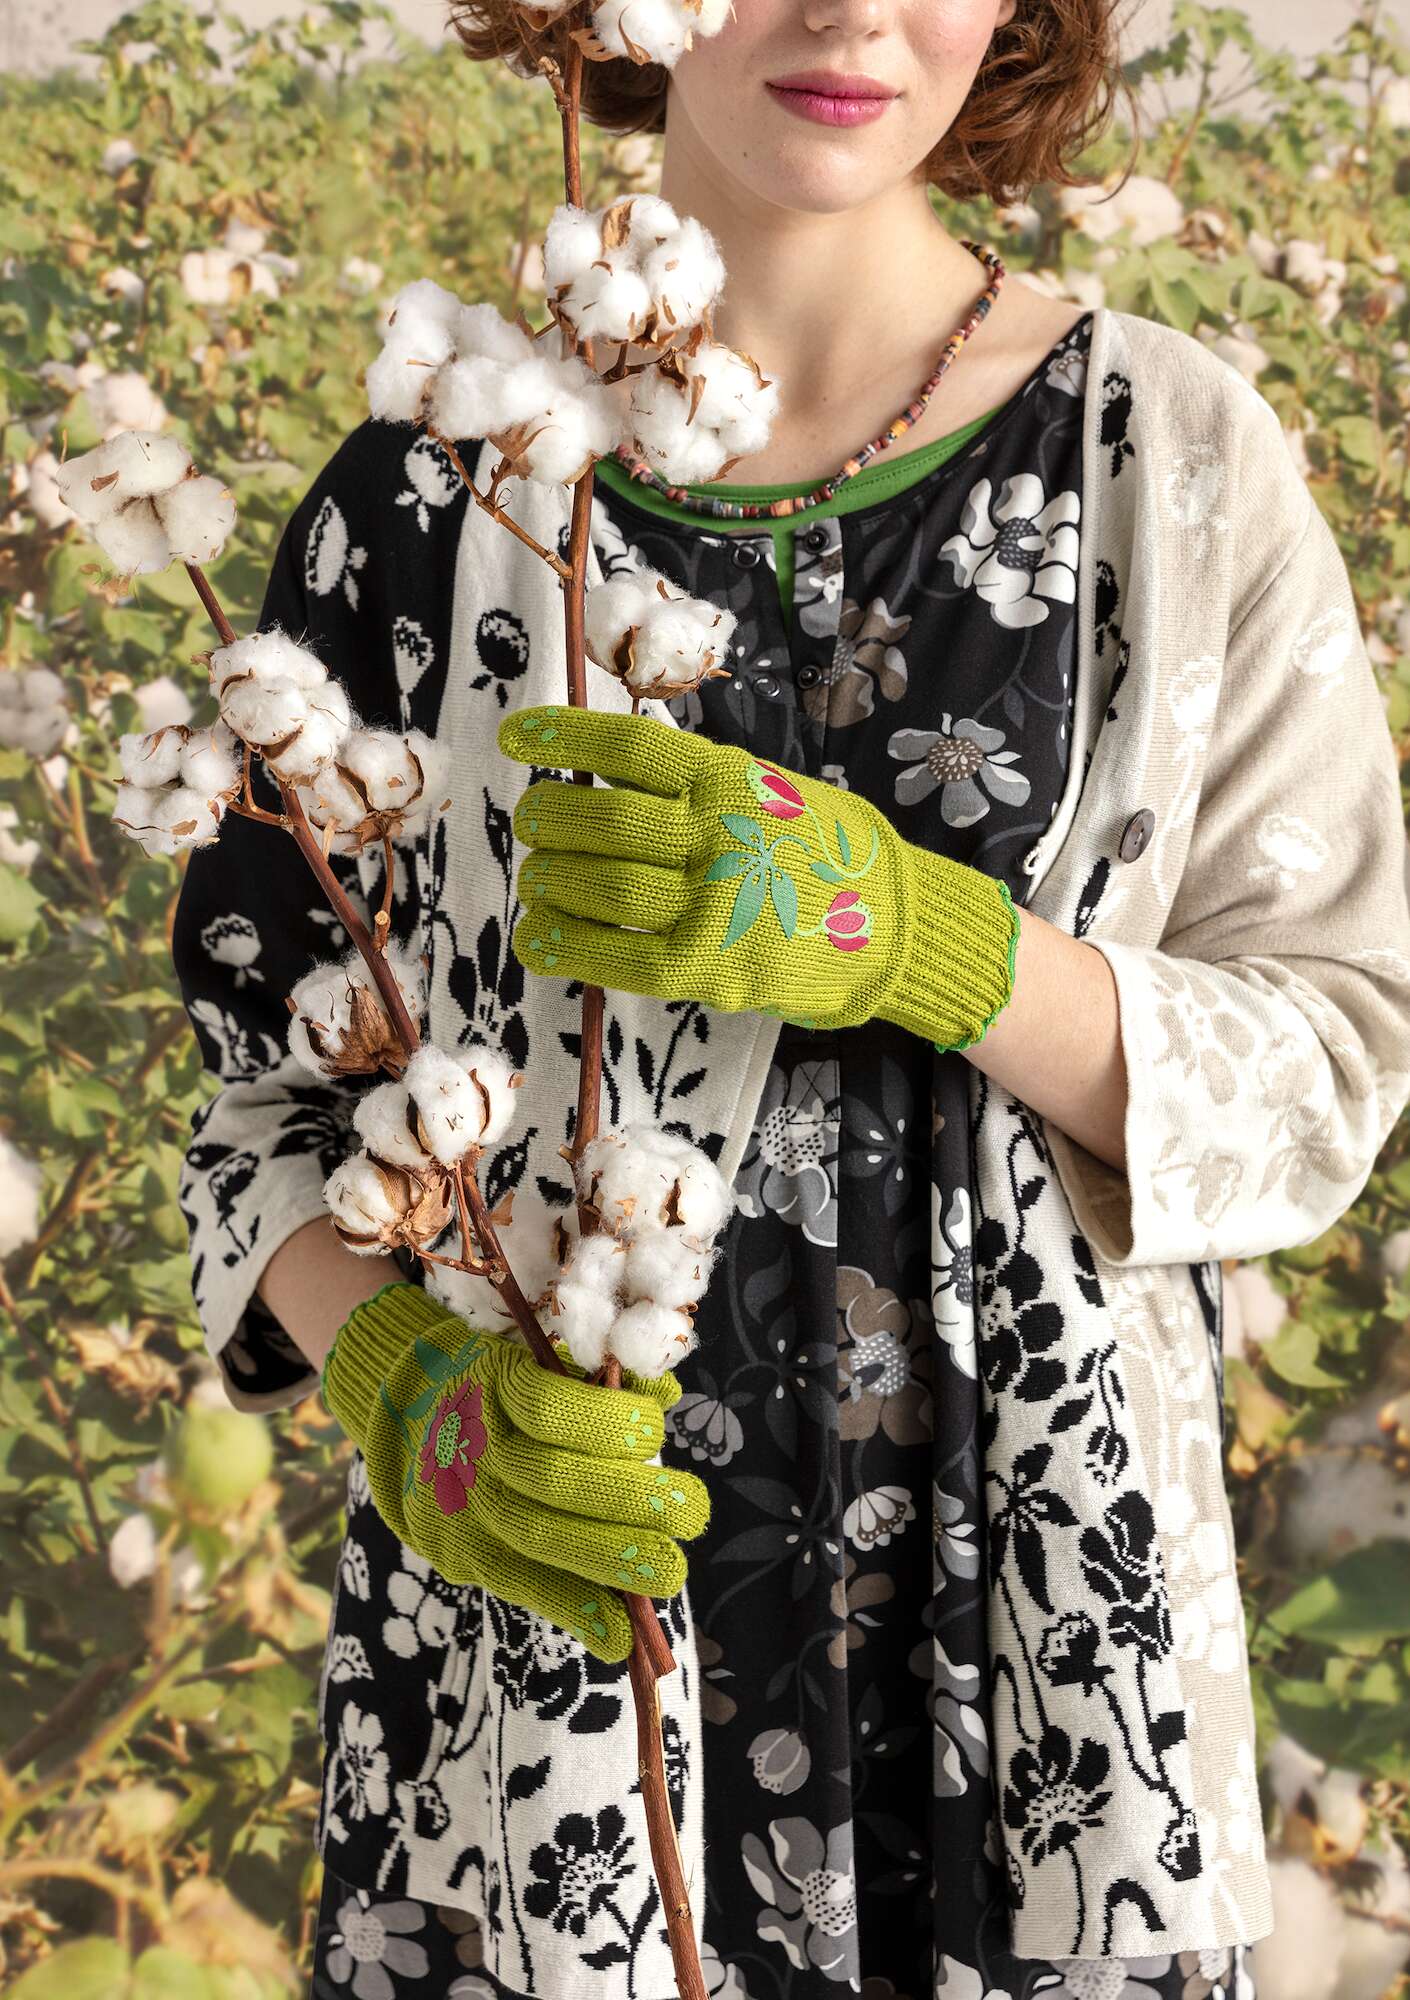 “Gardener” gardening gloves made from recycled polyester kiwi